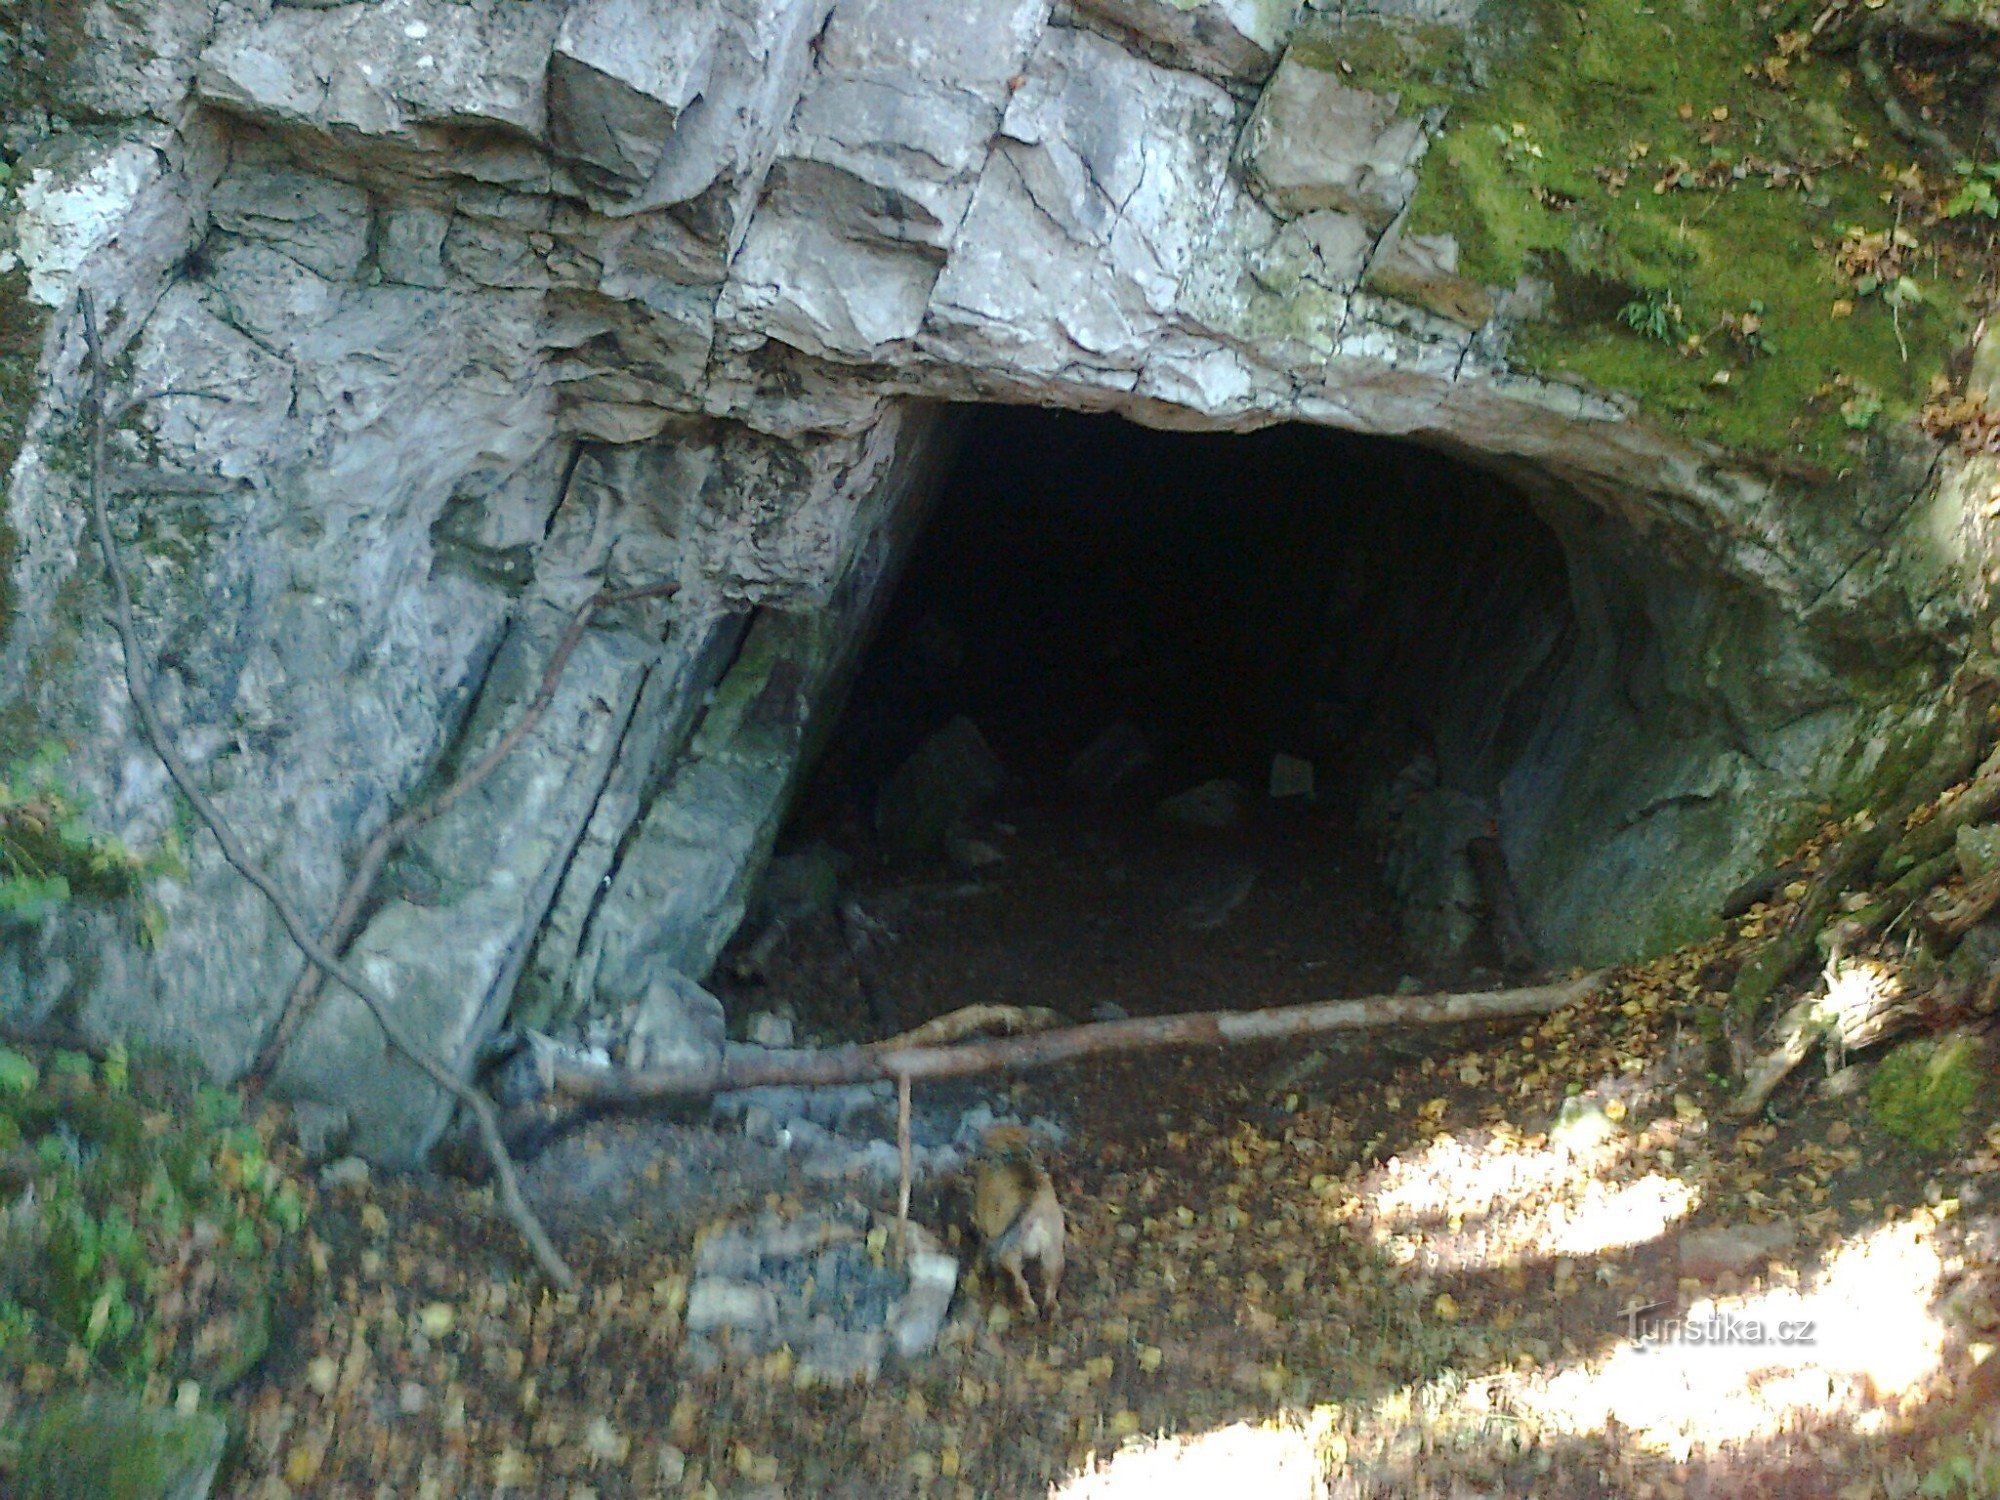 Koda-barlang